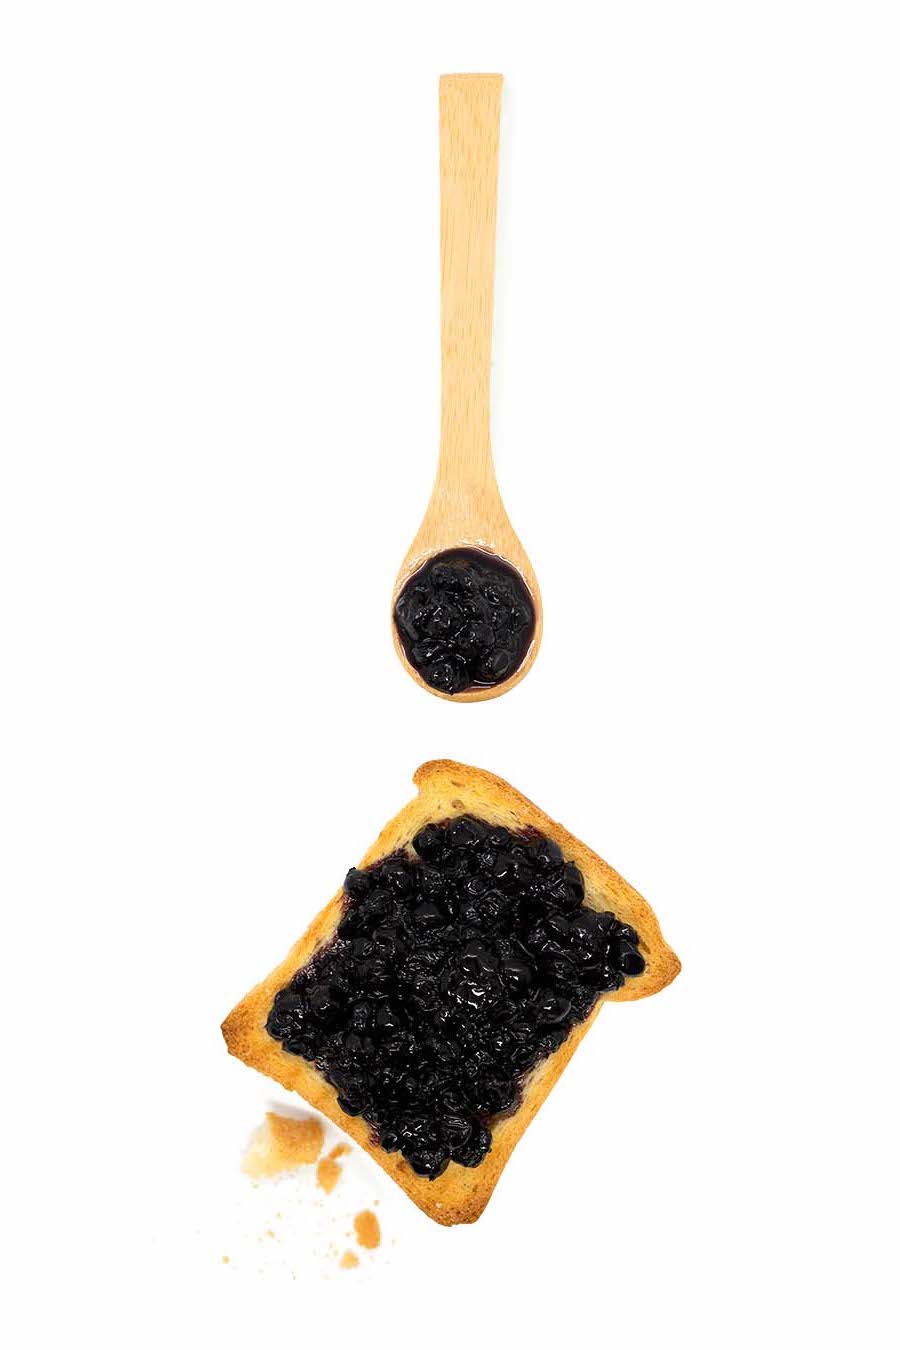 Artisanal Wild Bilberry Jam spoon toast Health from Europe